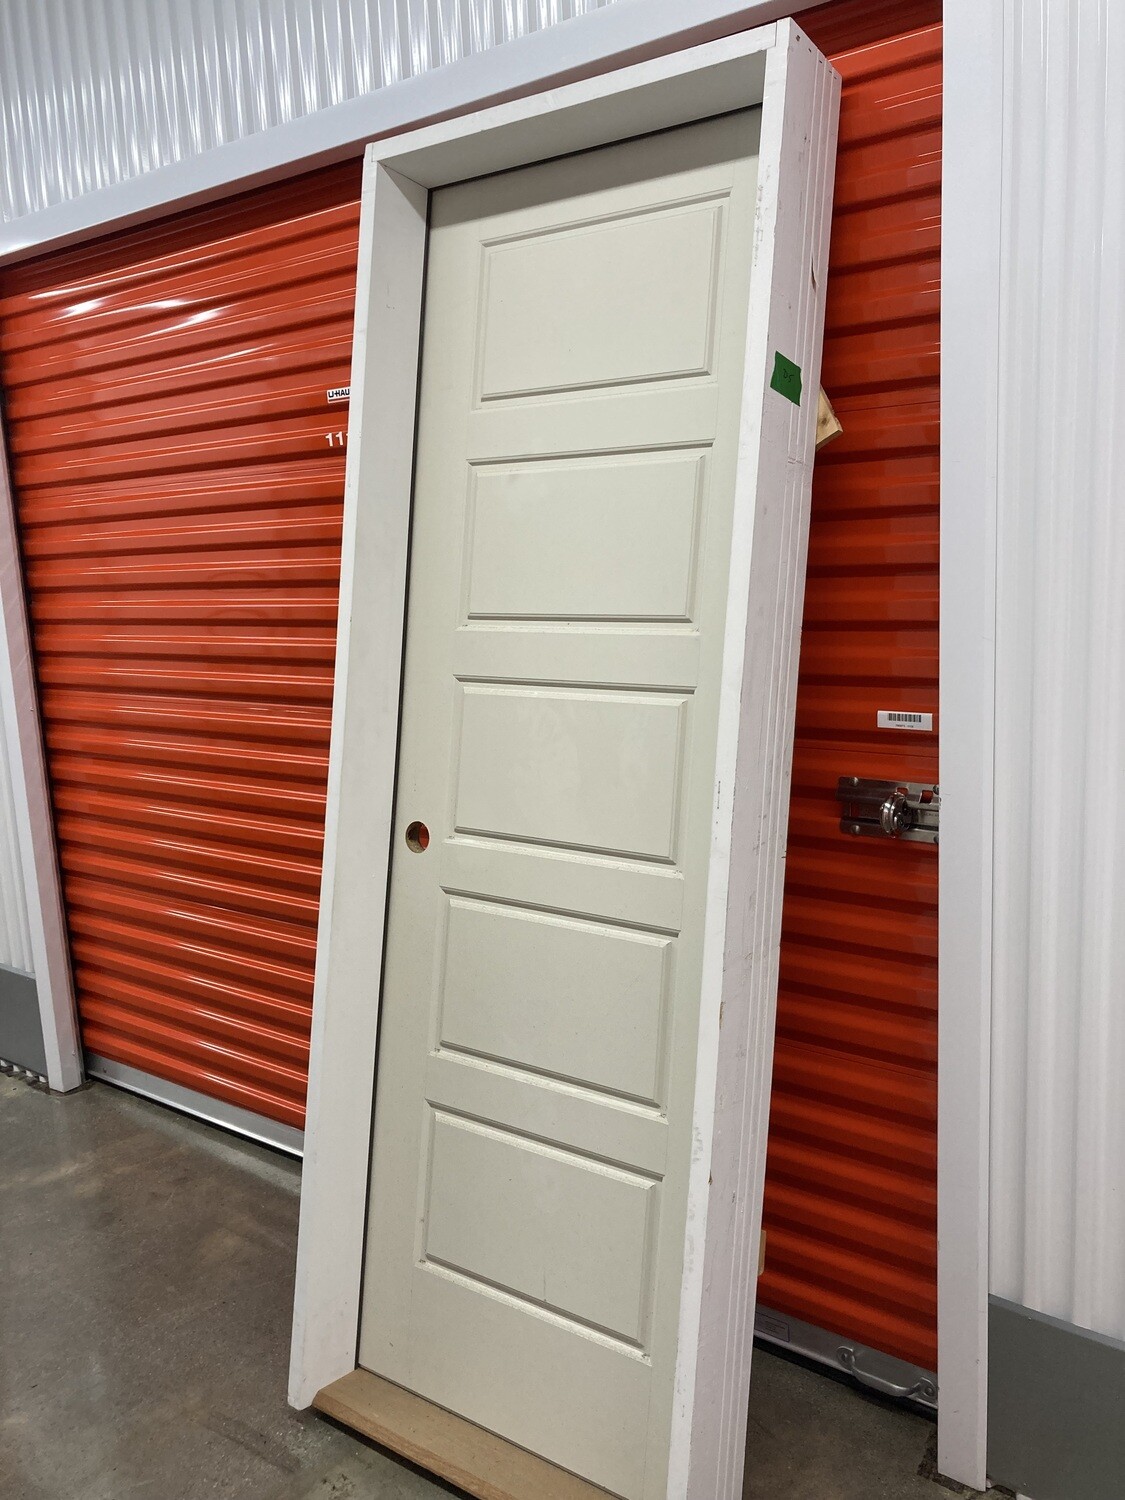 New Interior Door RH 28x80 oak threshhold (D6) #1148 ** 9 mos. to sell, full price